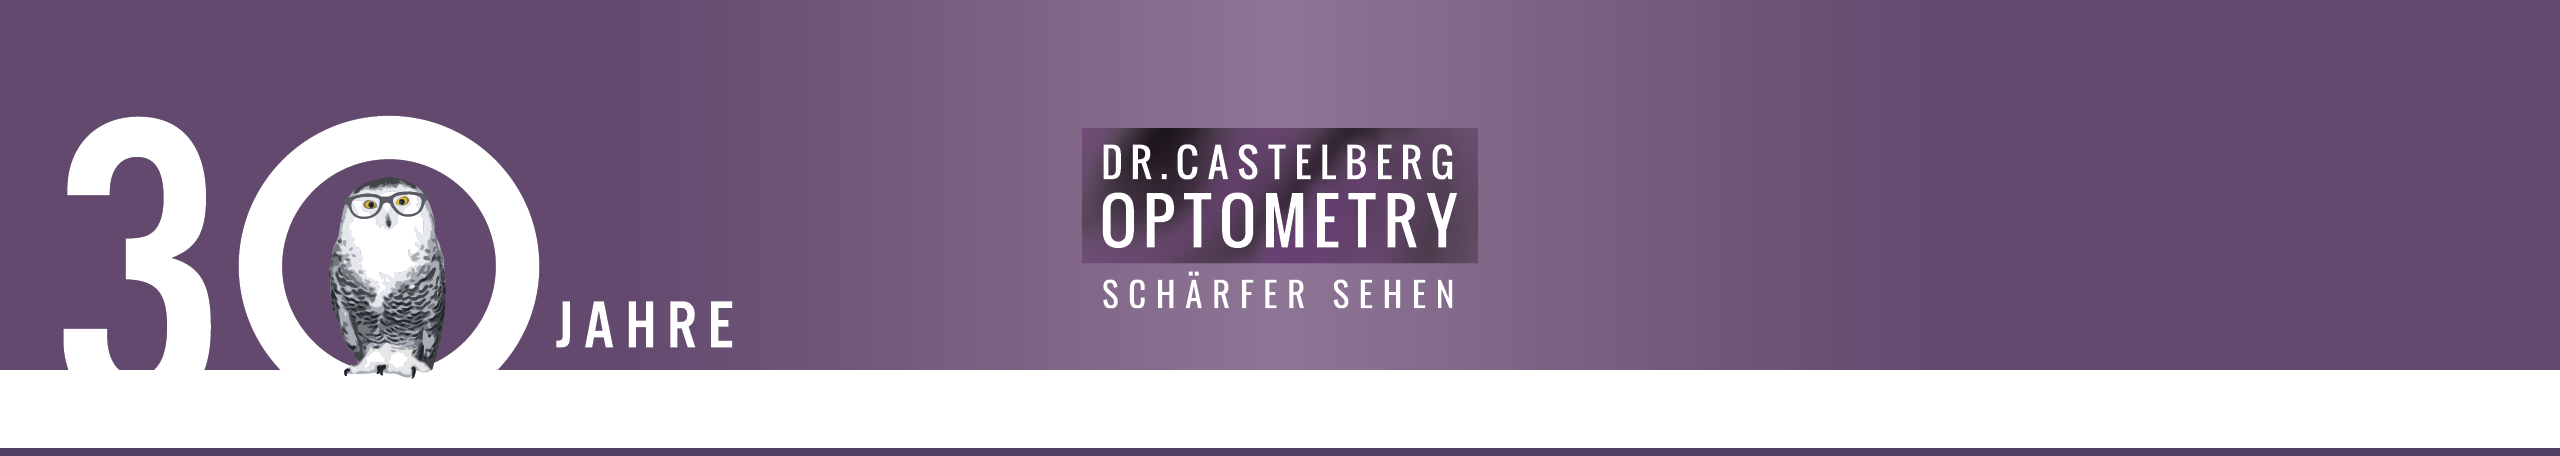 dr. castelberg